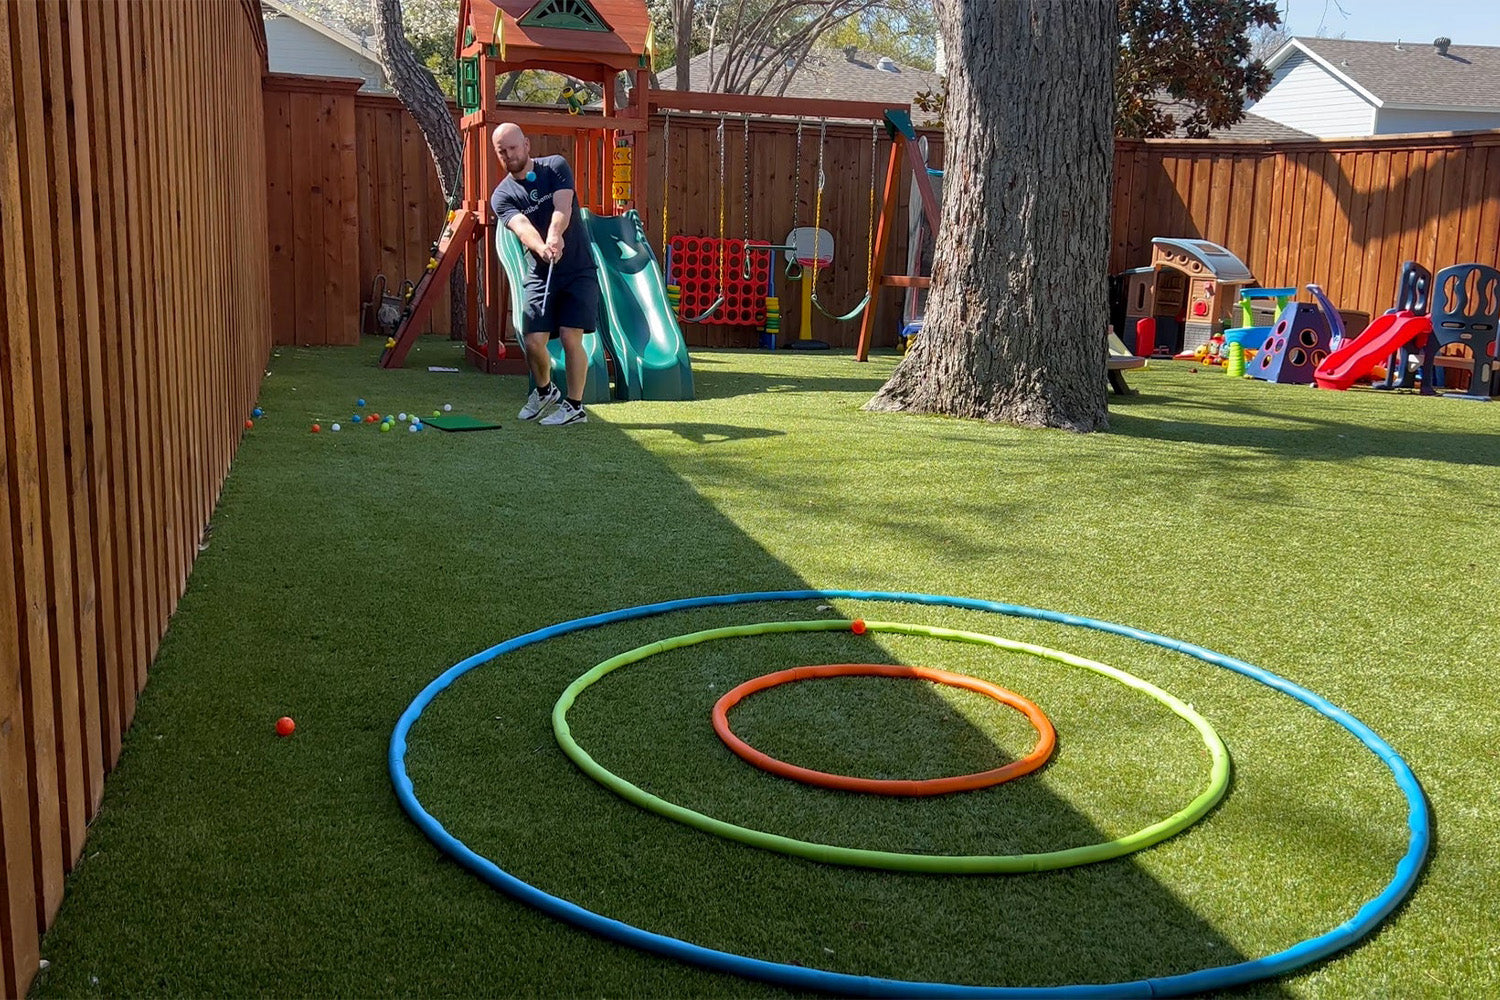 How To Practice Golf in the Backyard: Three Fun Games